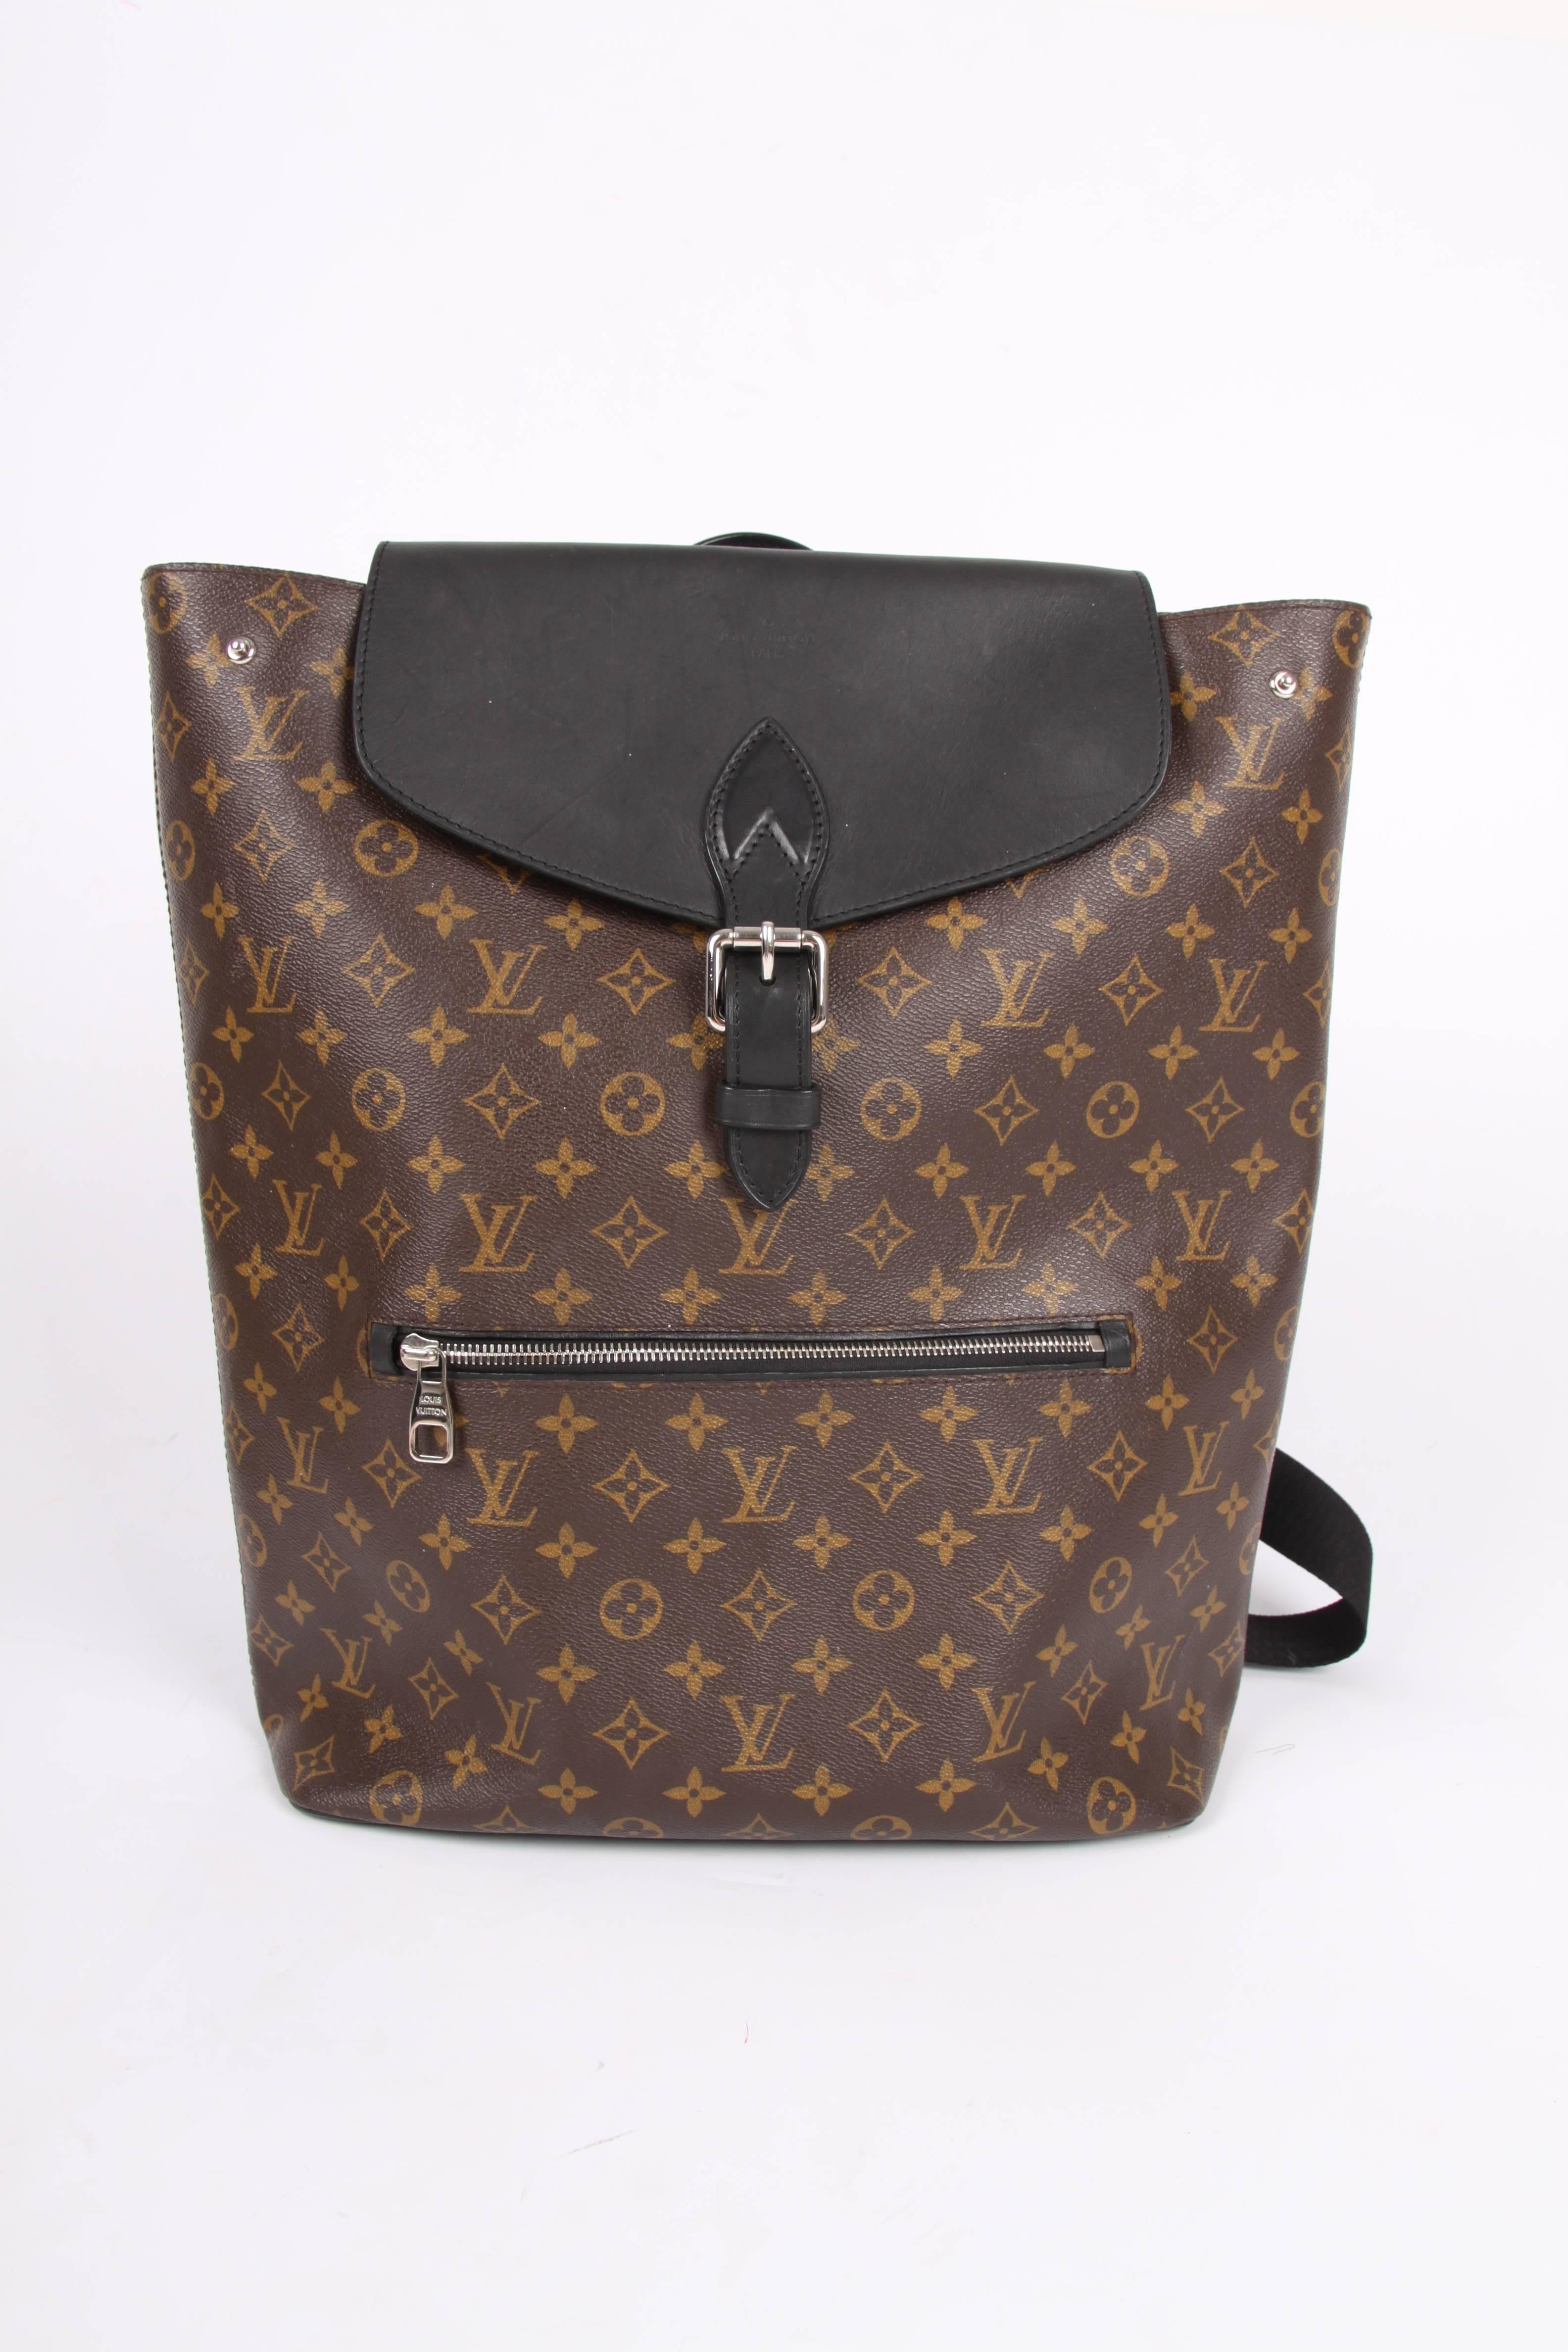 Original Two Sided Louis Vuitton Big Sized Bag in Lekki - Bags